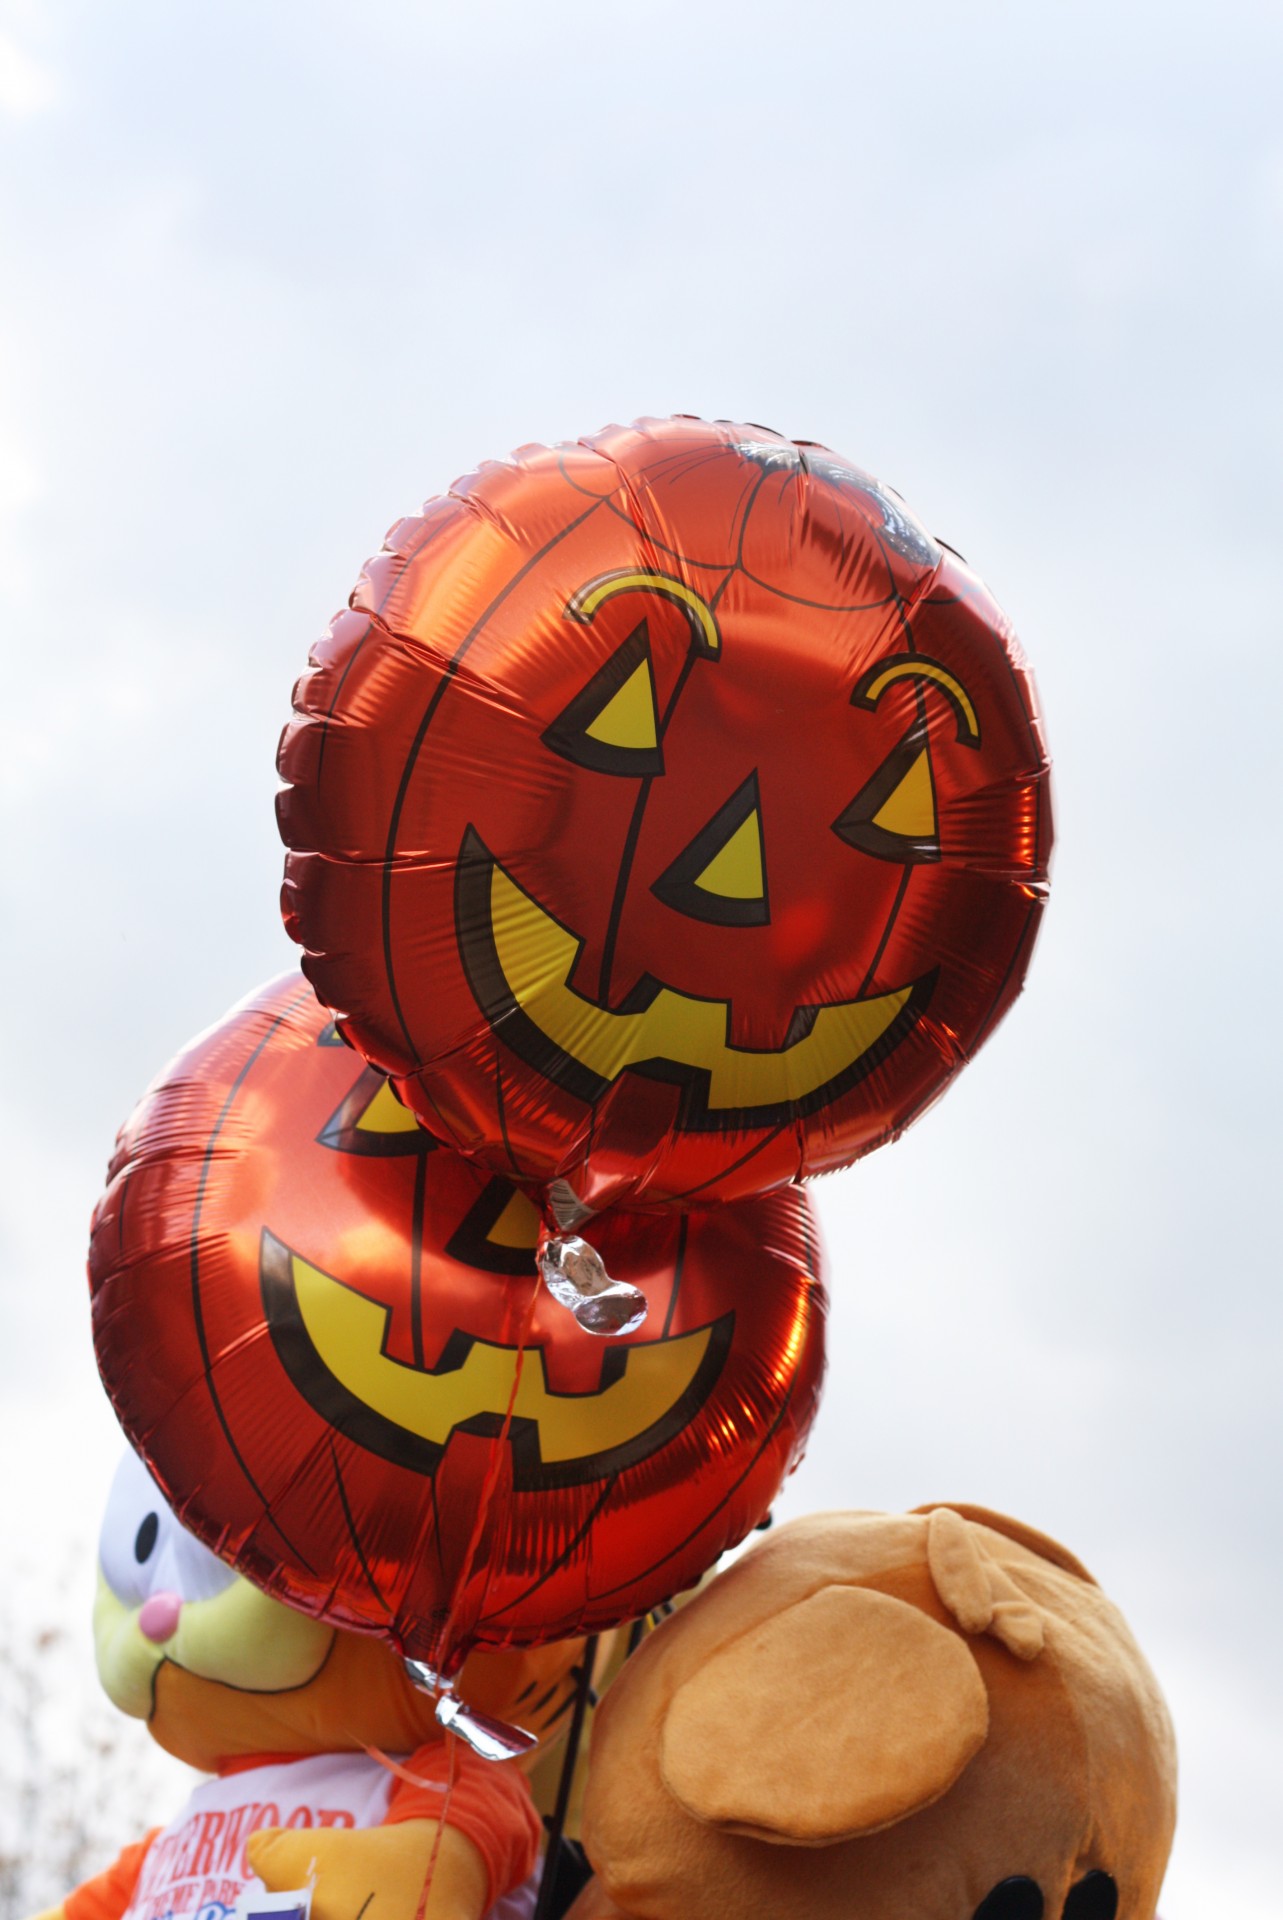 jack o' lantern balloons decoration free photo